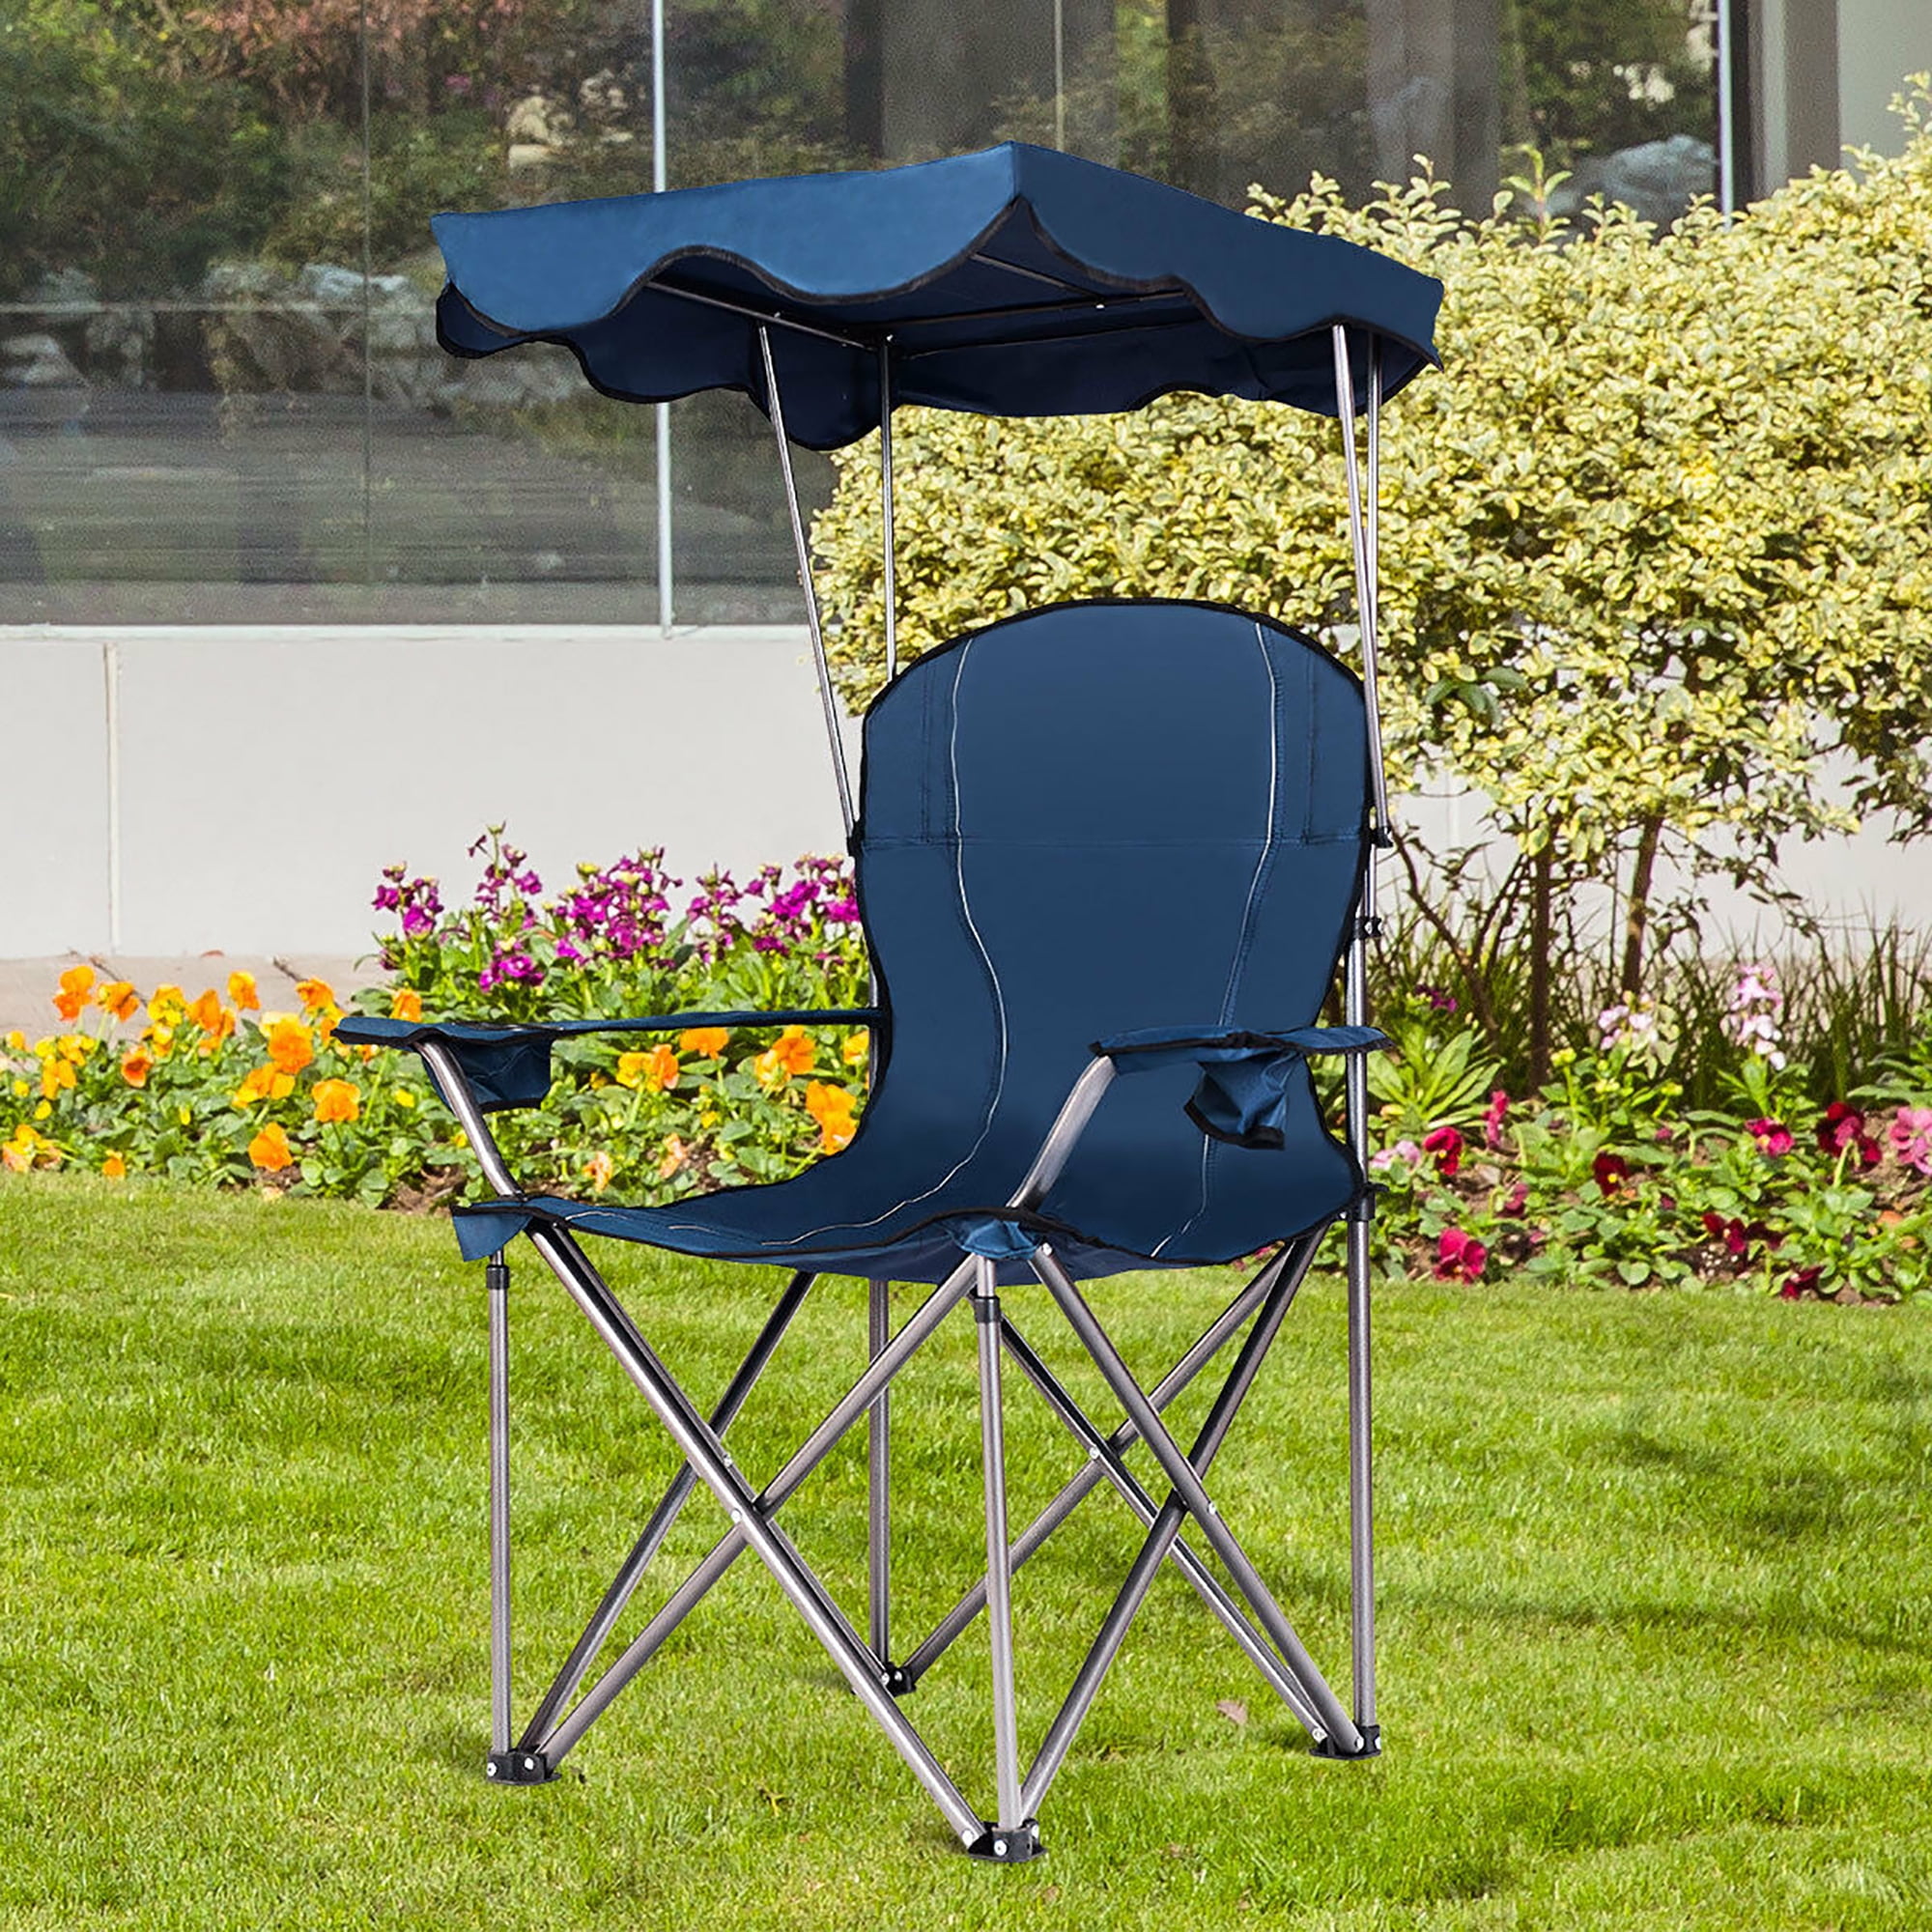 Folding Camping Chairs Chair Outdoor Garden Portable Hiking Fishing Chairs UK 